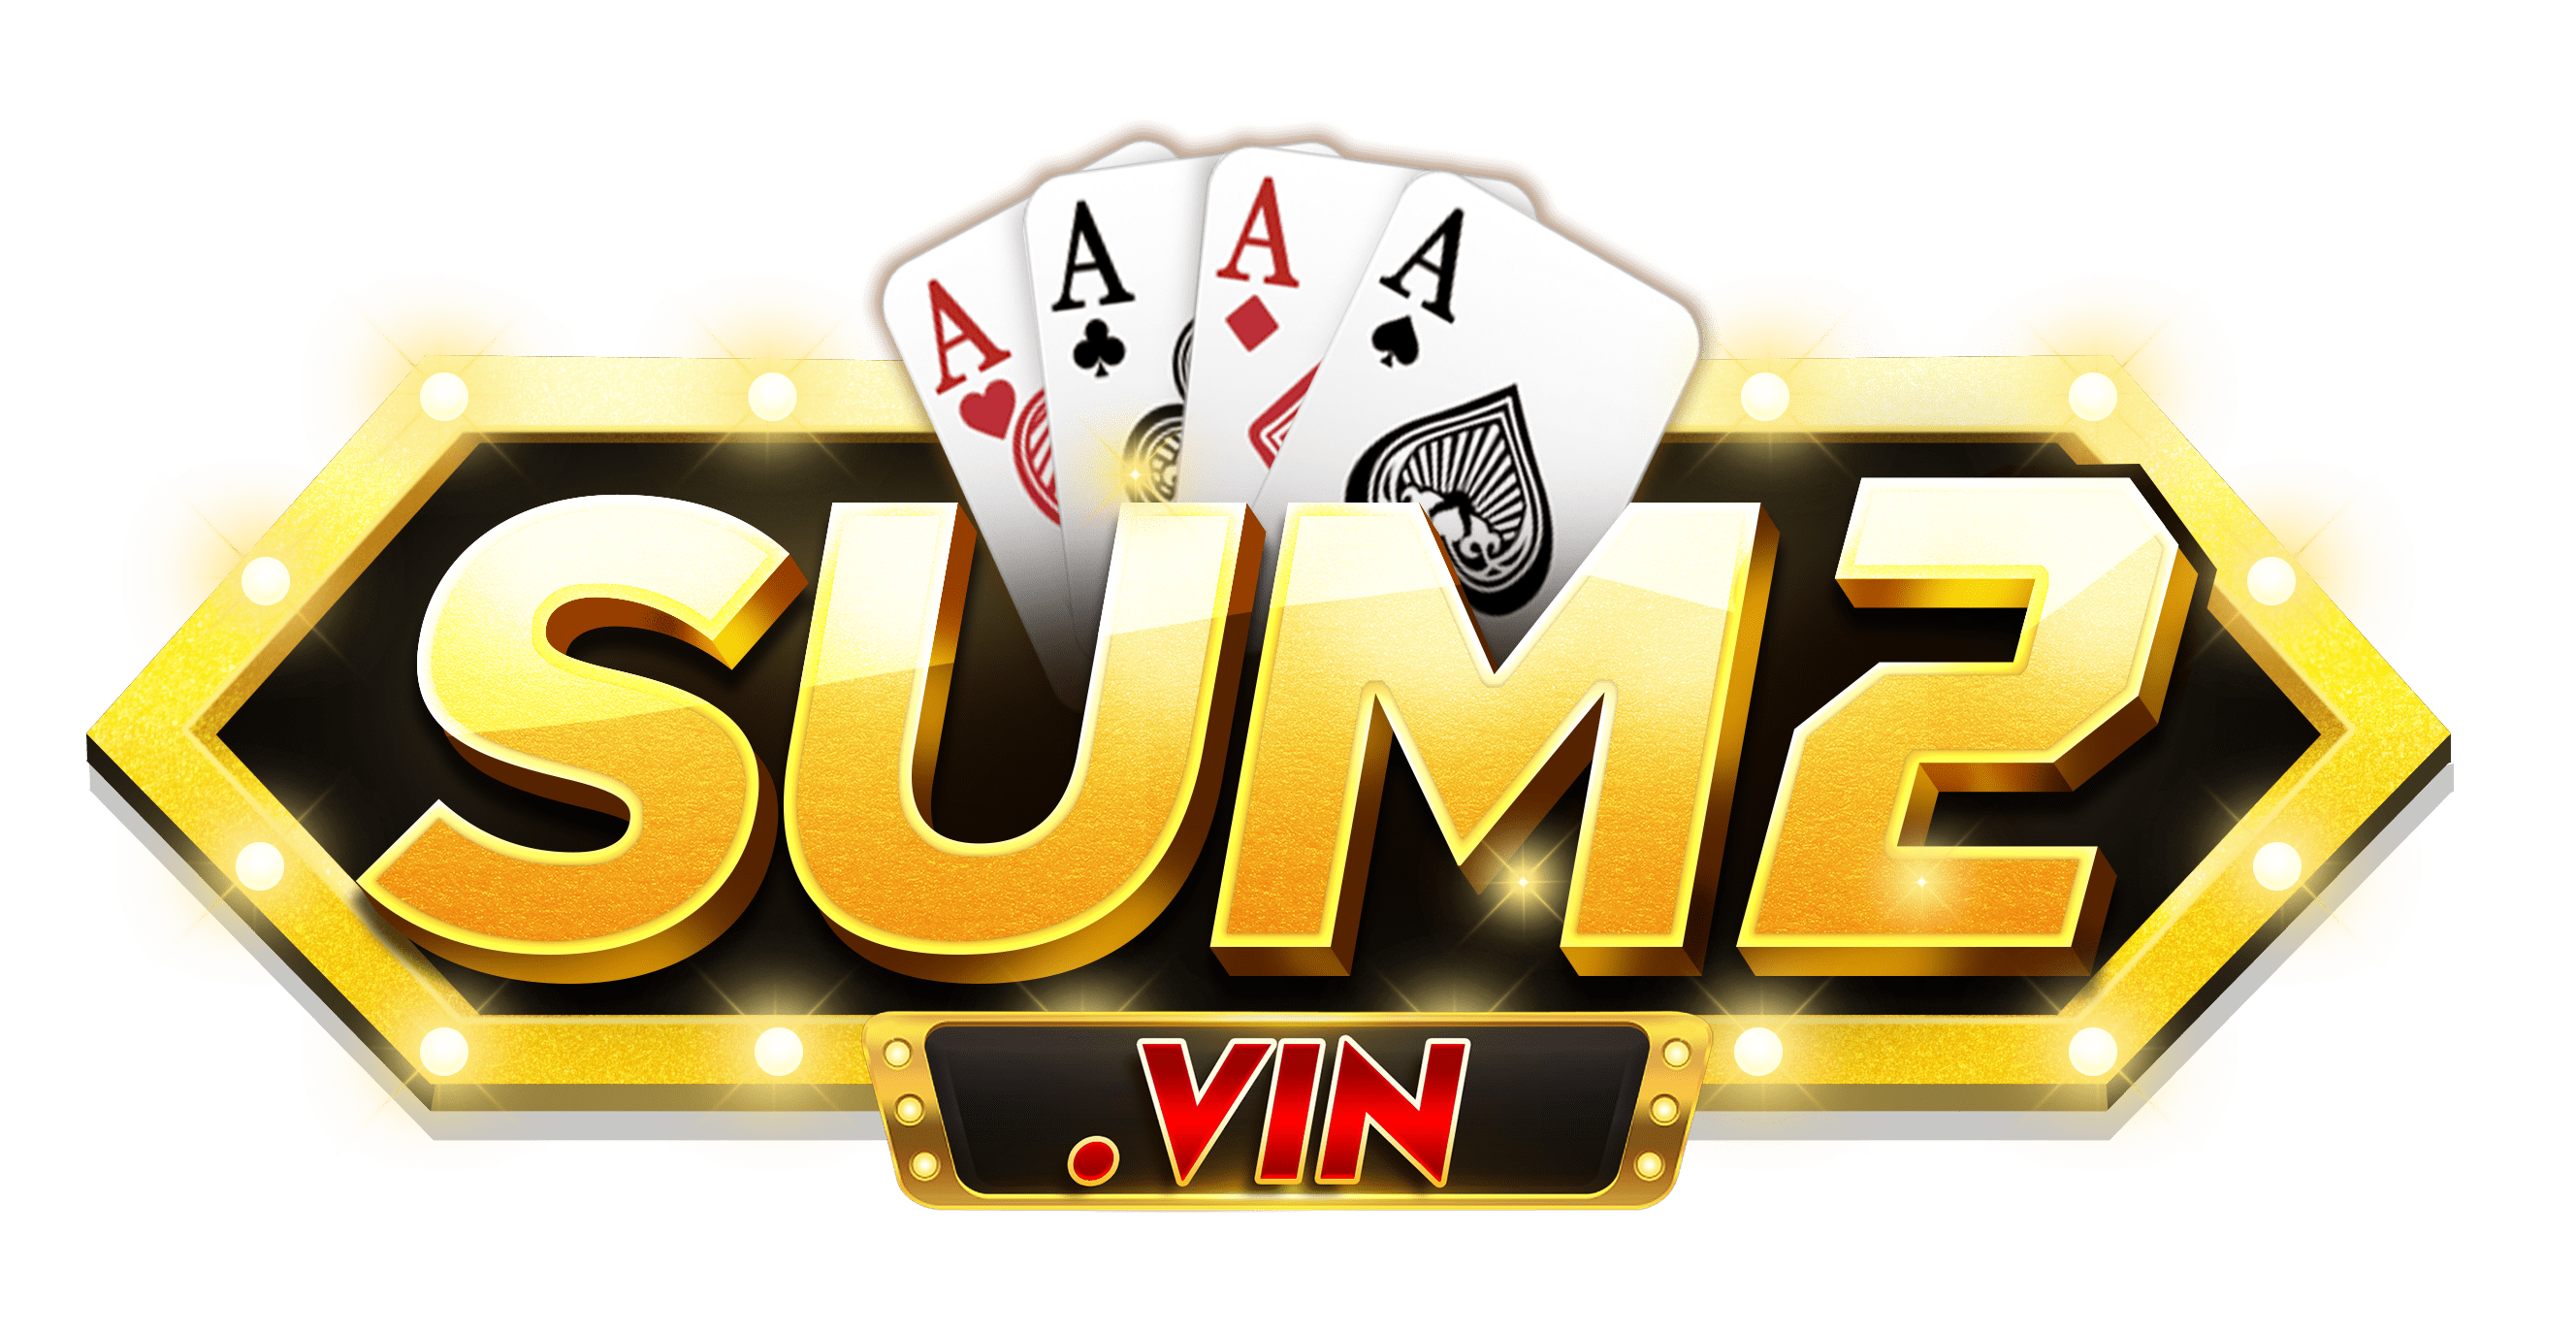 Giới thiệu Sum2 Vin